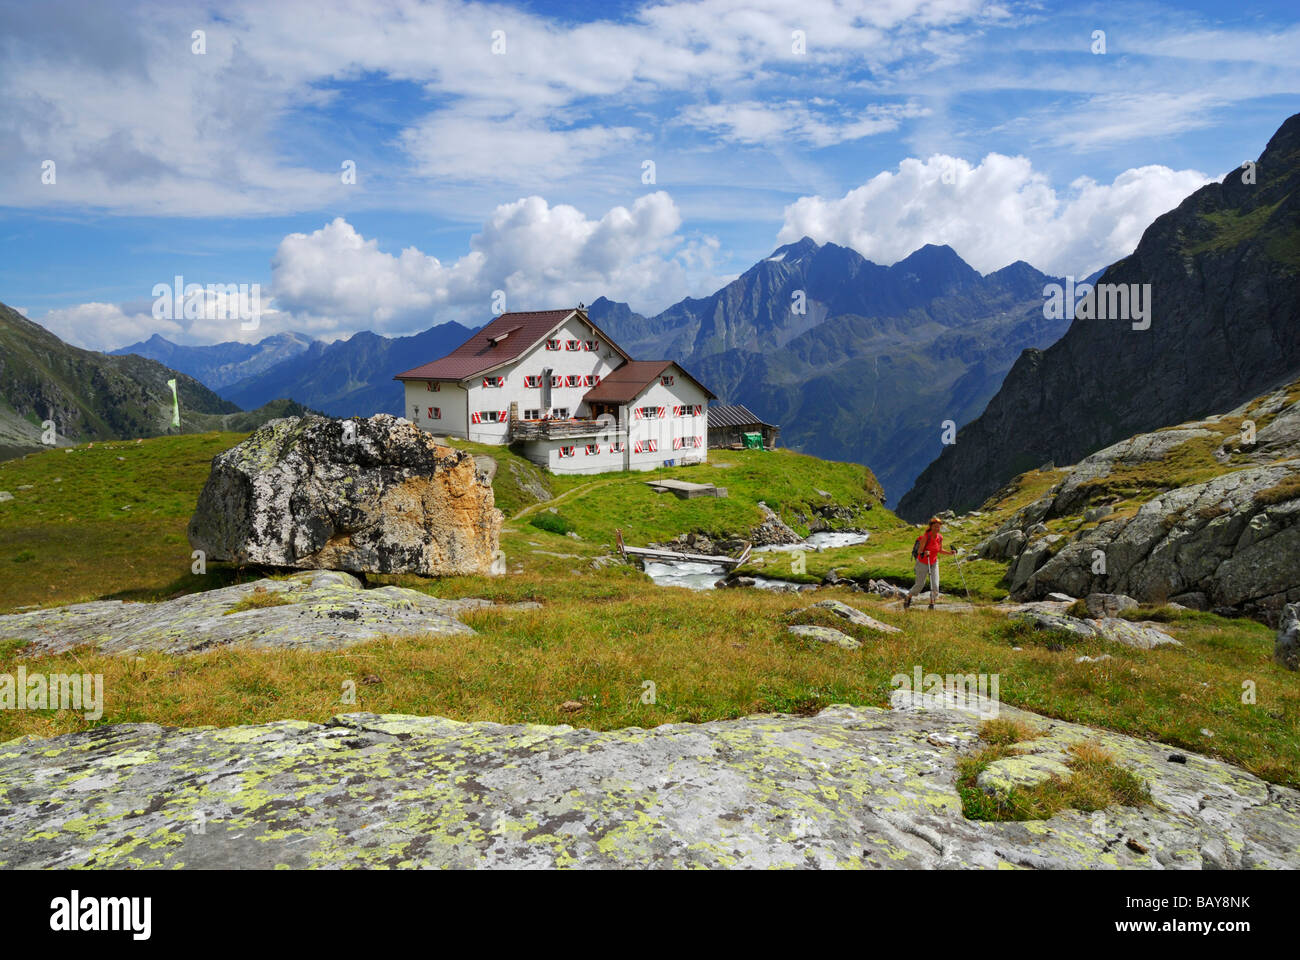 hiker in front of hut Neue Regensburger Huette with Habicht, Stubaier Alpen range, Stubai, Tyrol, Austria Stock Photo